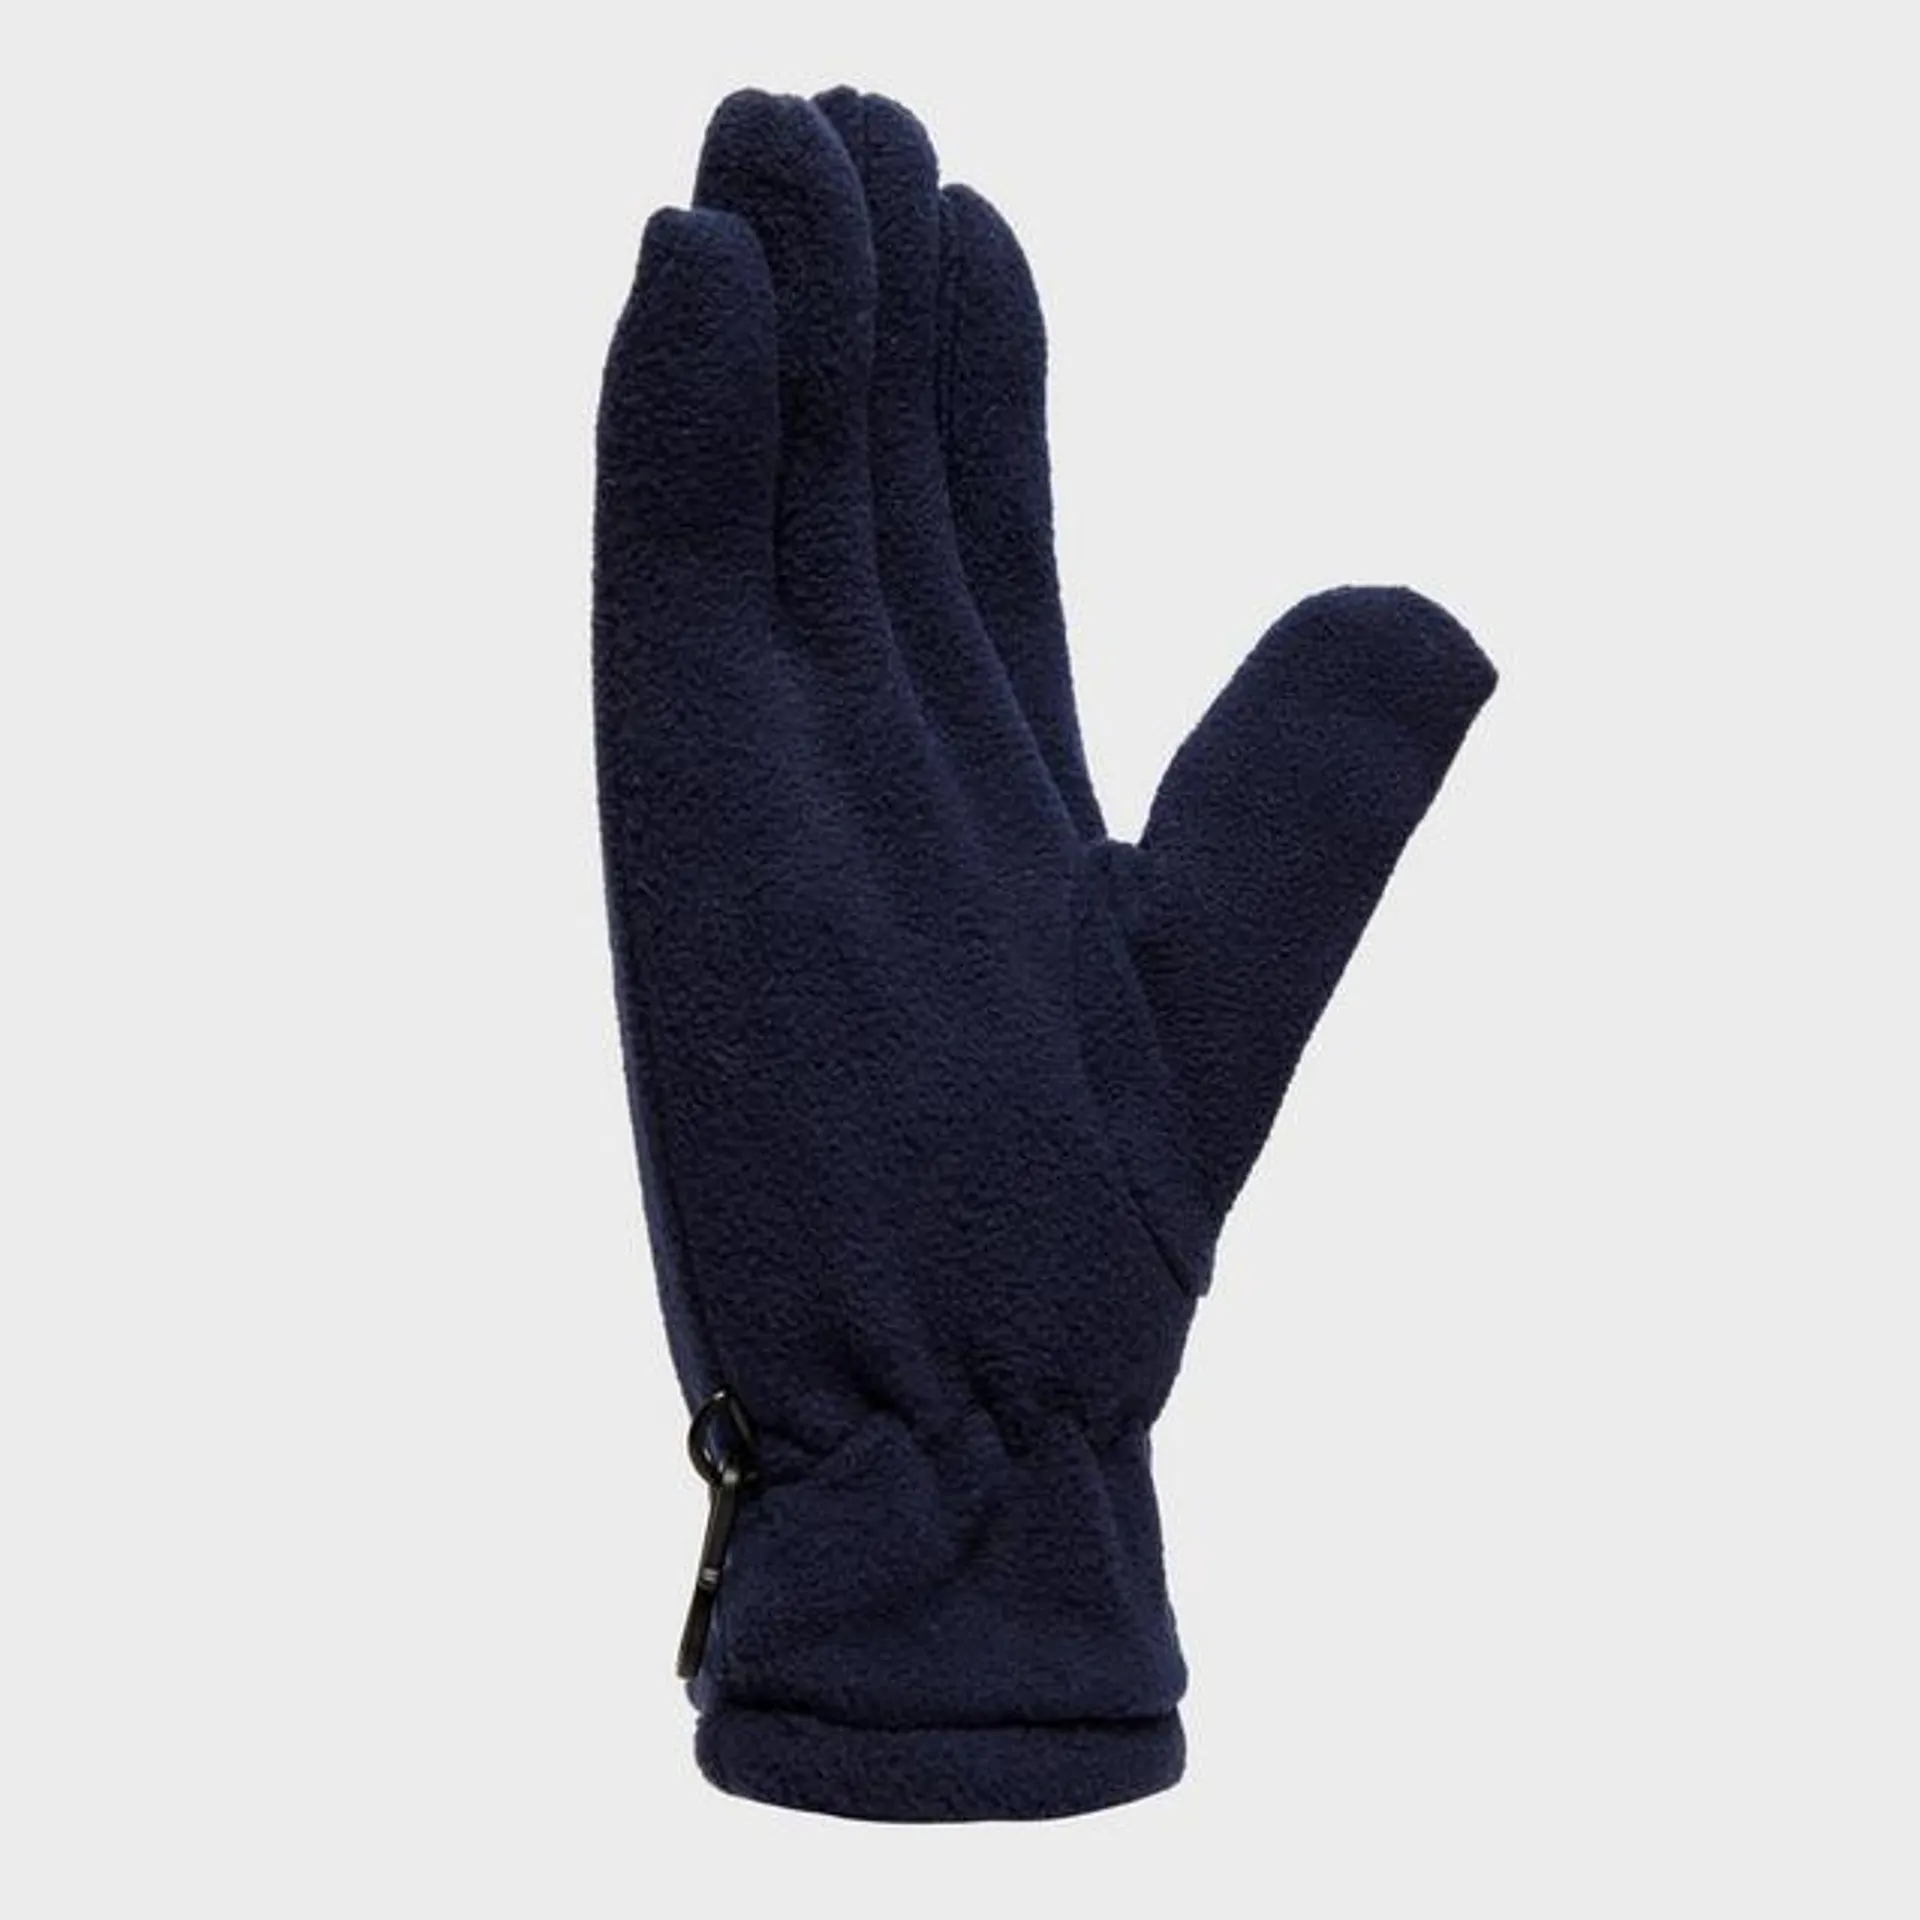 Unisex Thinsulate Fleece Gloves